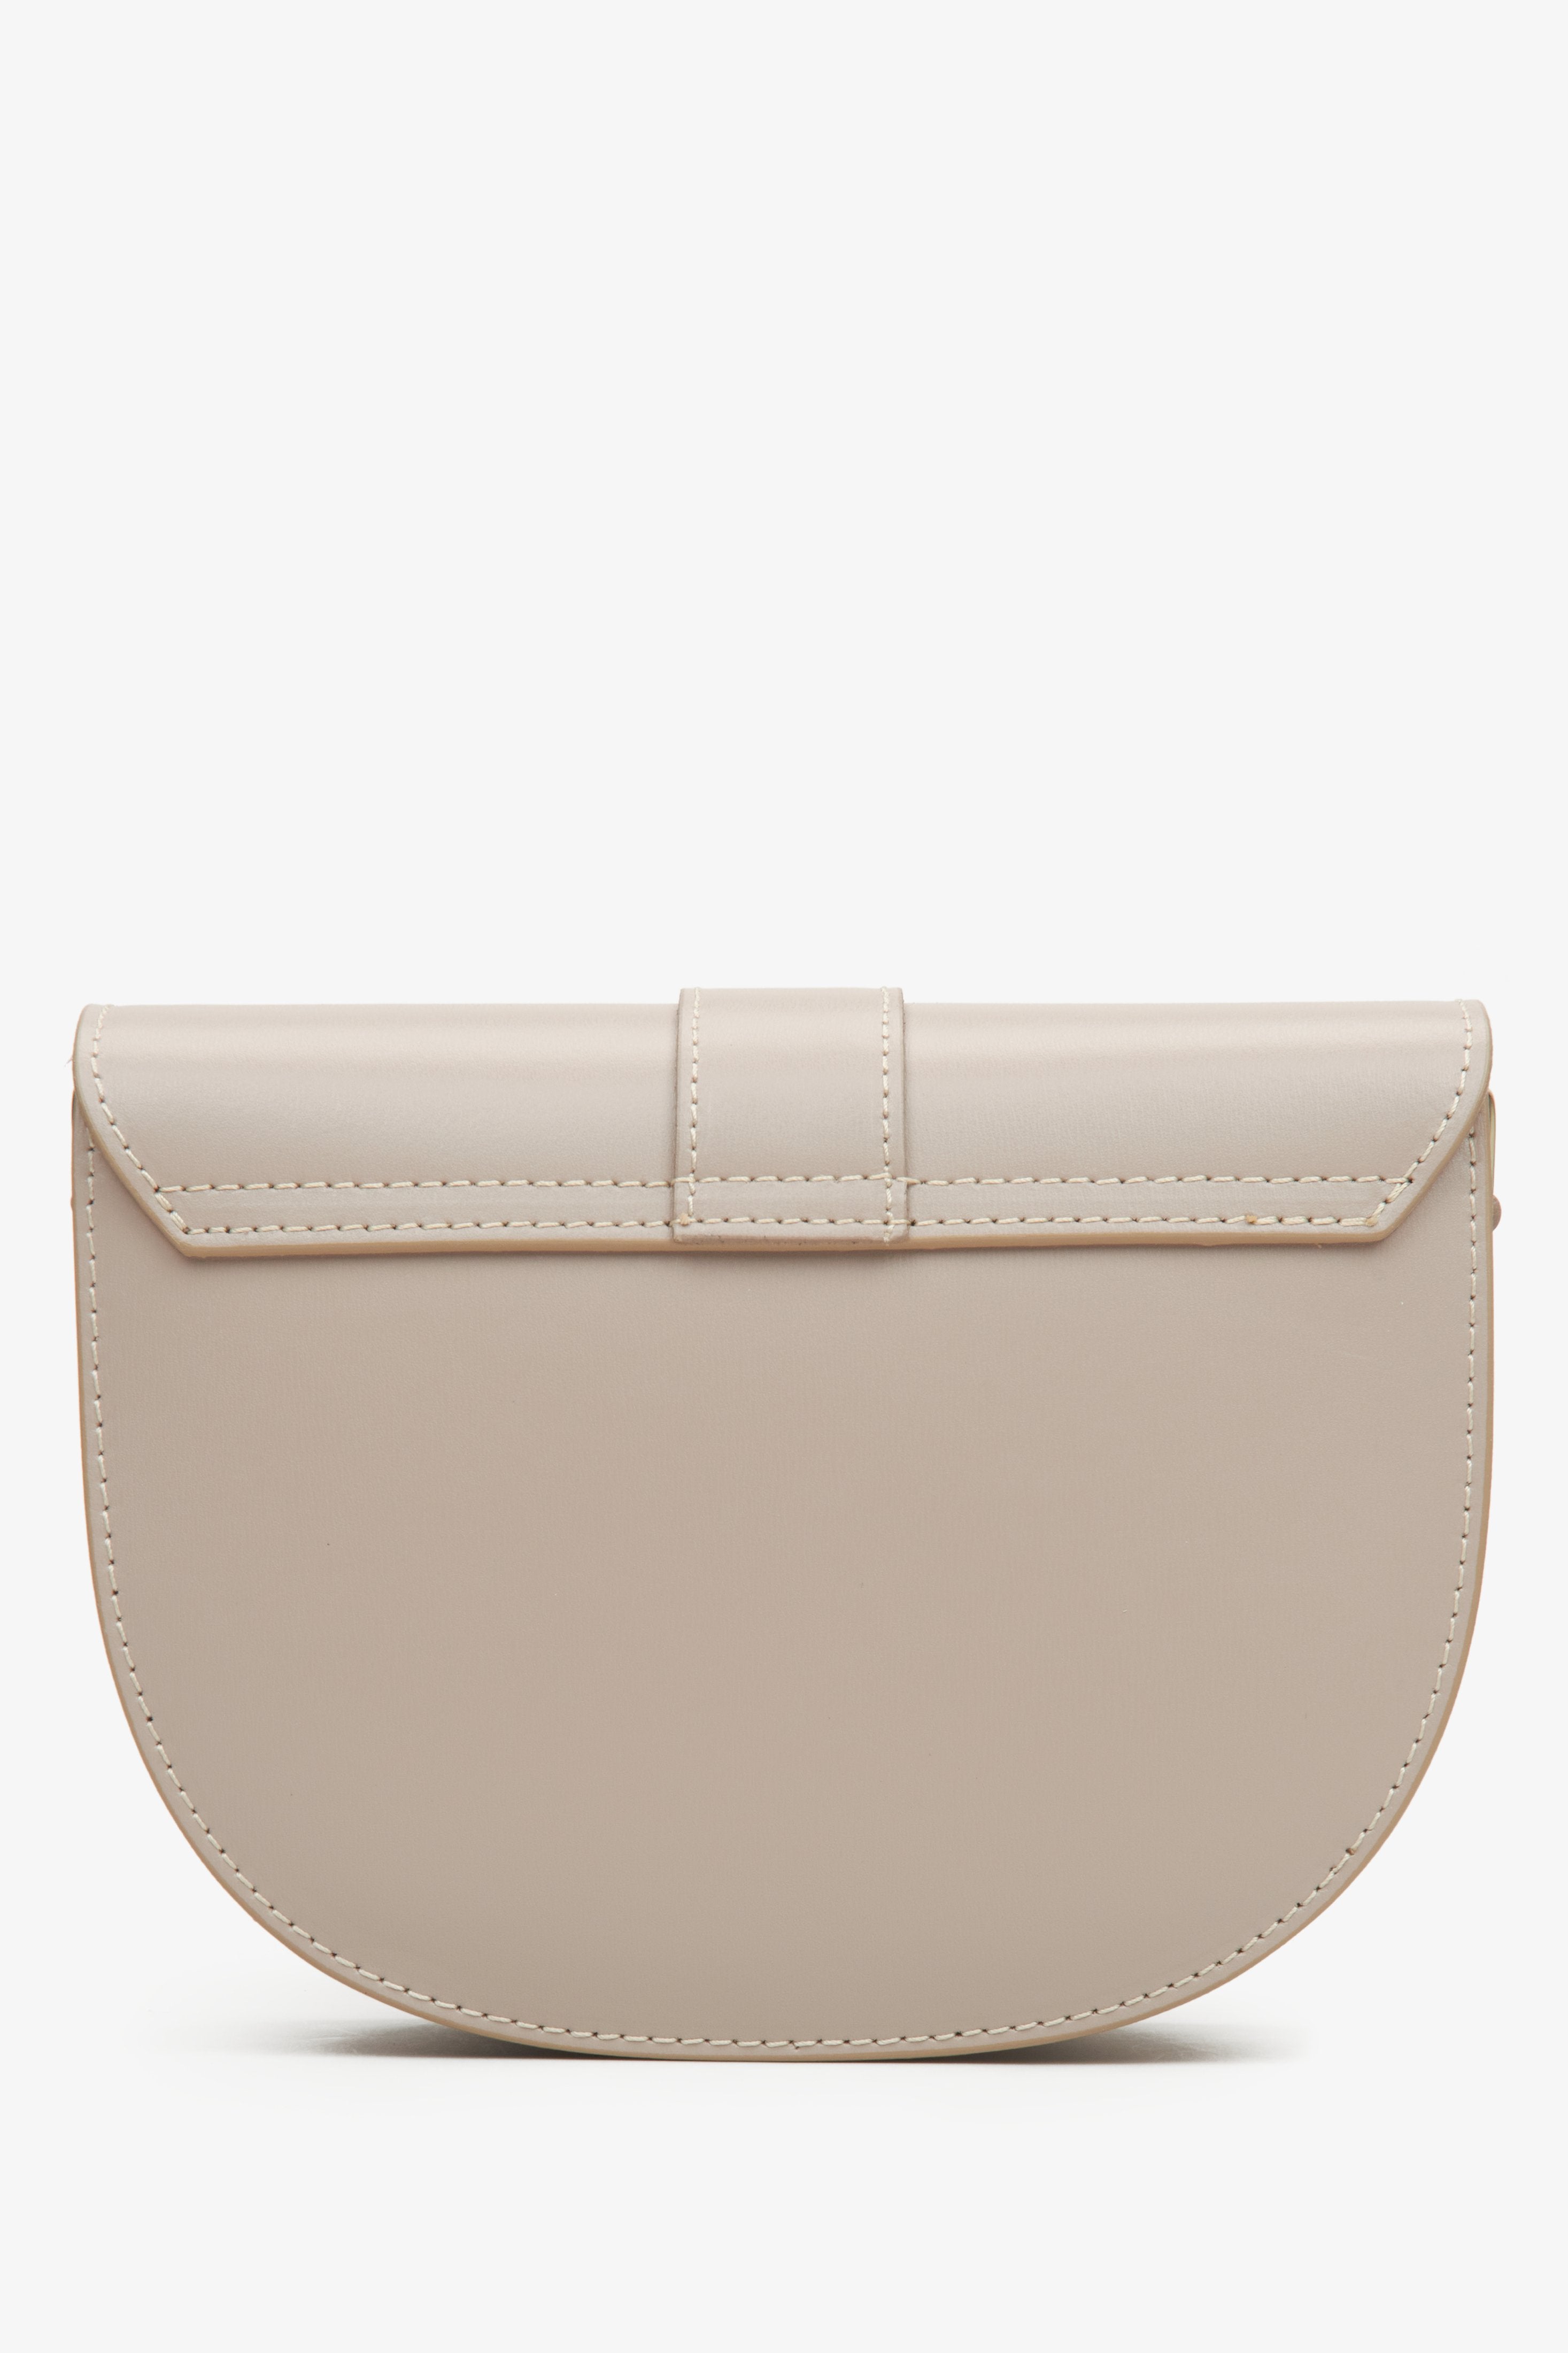 Estro women's beige crescent-shaped handbag made of genuine leather - back view presentation of the model.